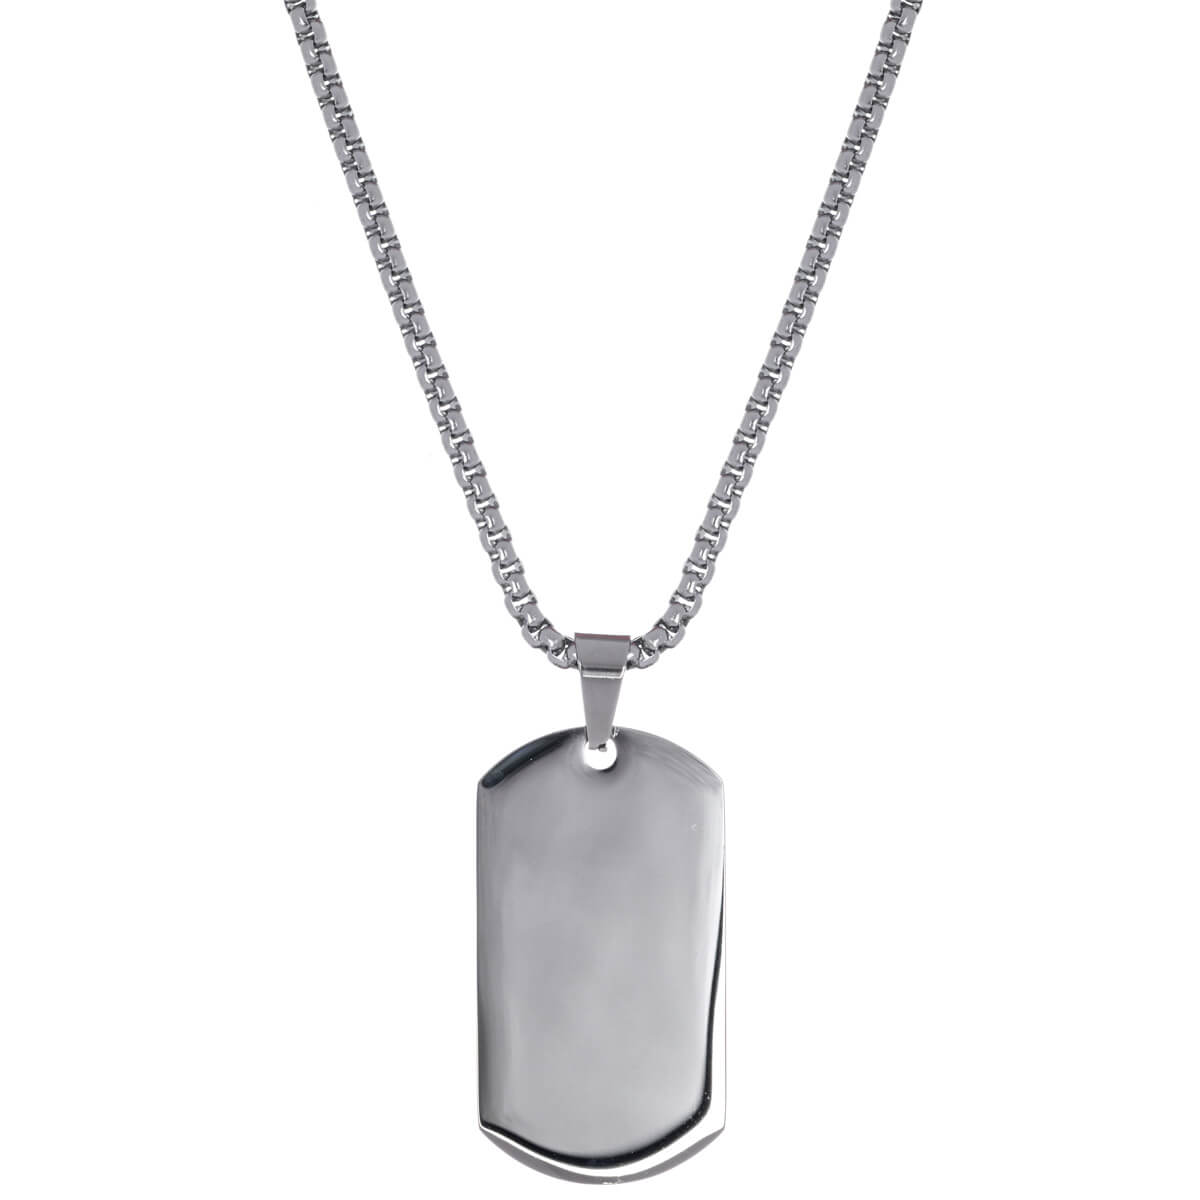 Tile pendant steel necklace 60cm (Steel 316L)